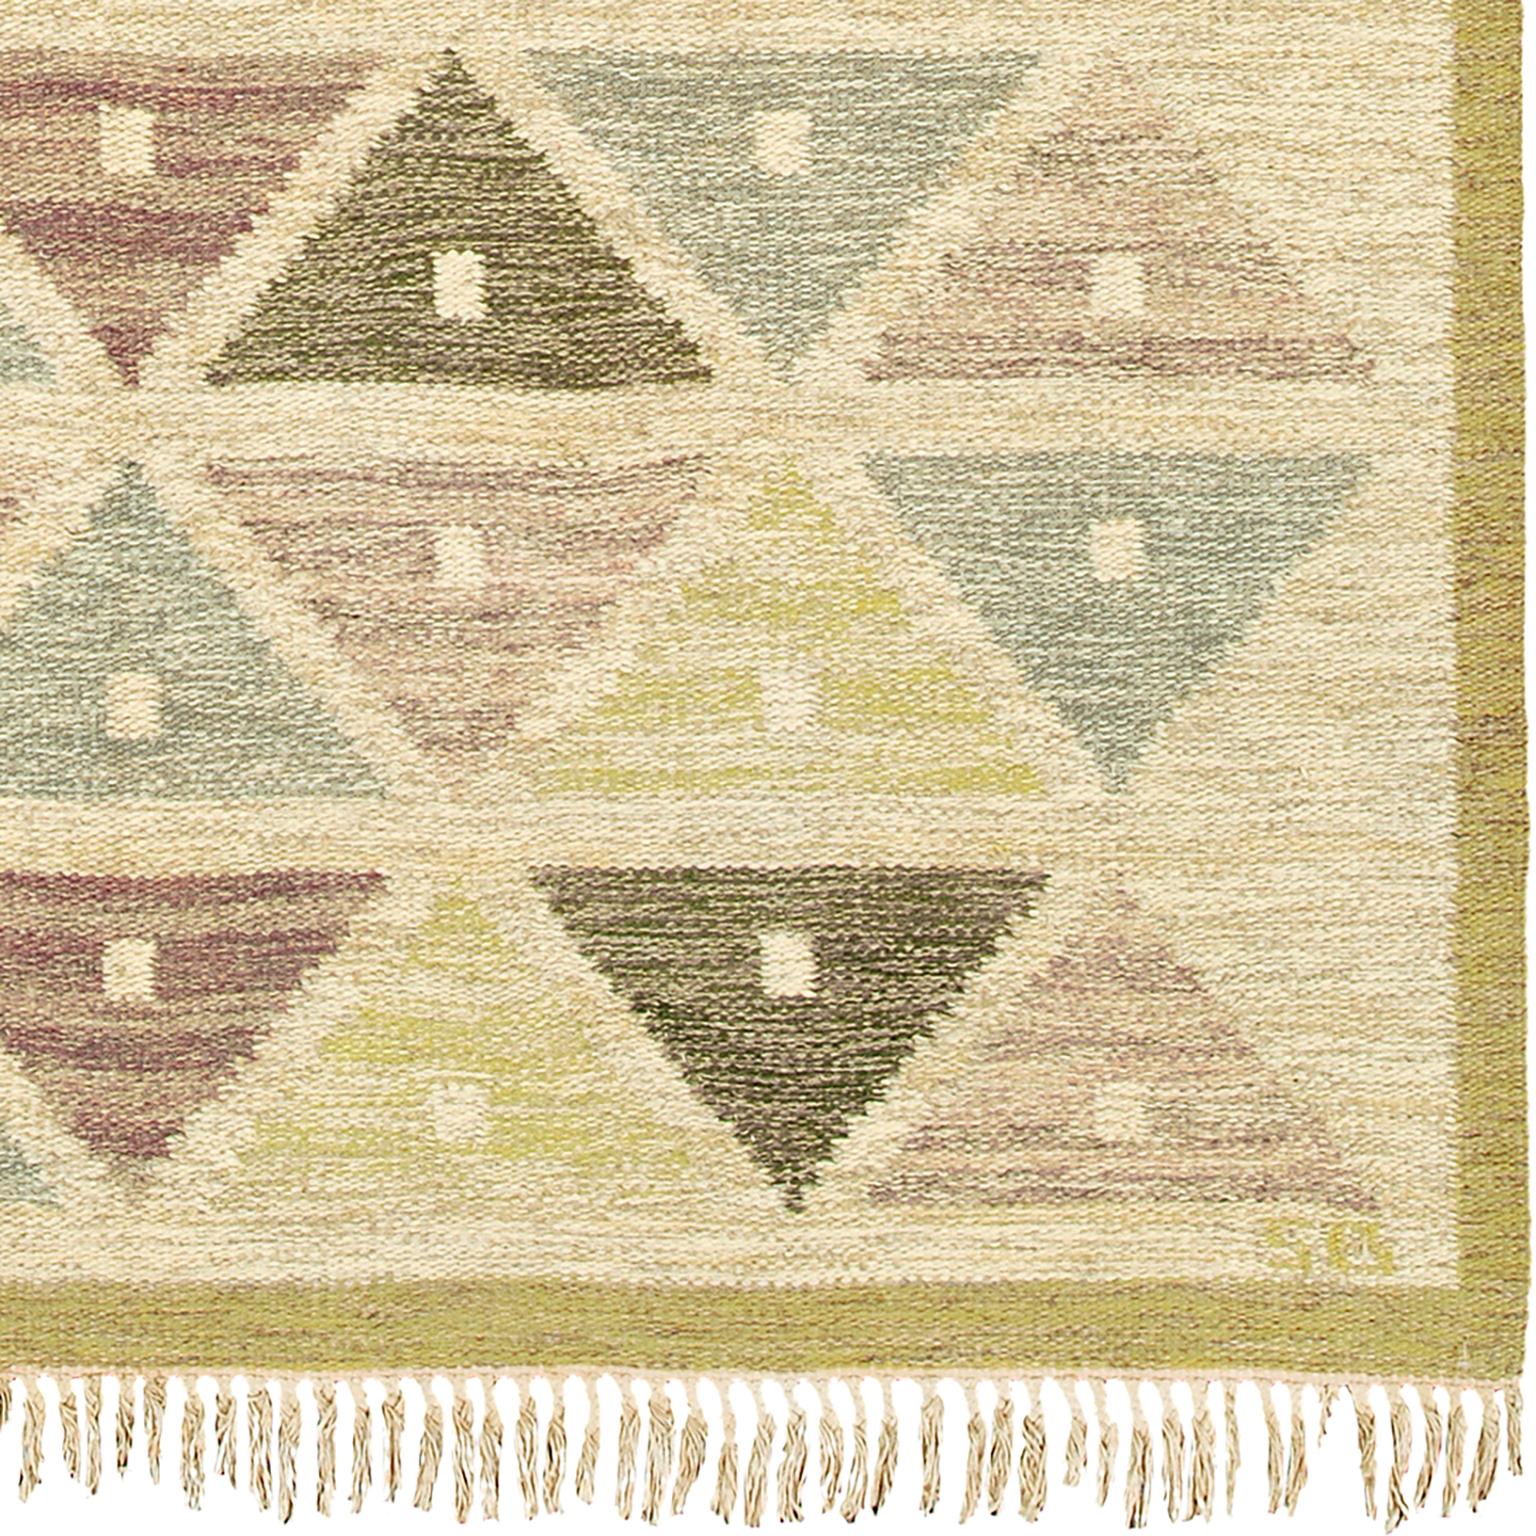 Swedish flat-weave rug
Sweden, circa 1941.
Initialed 